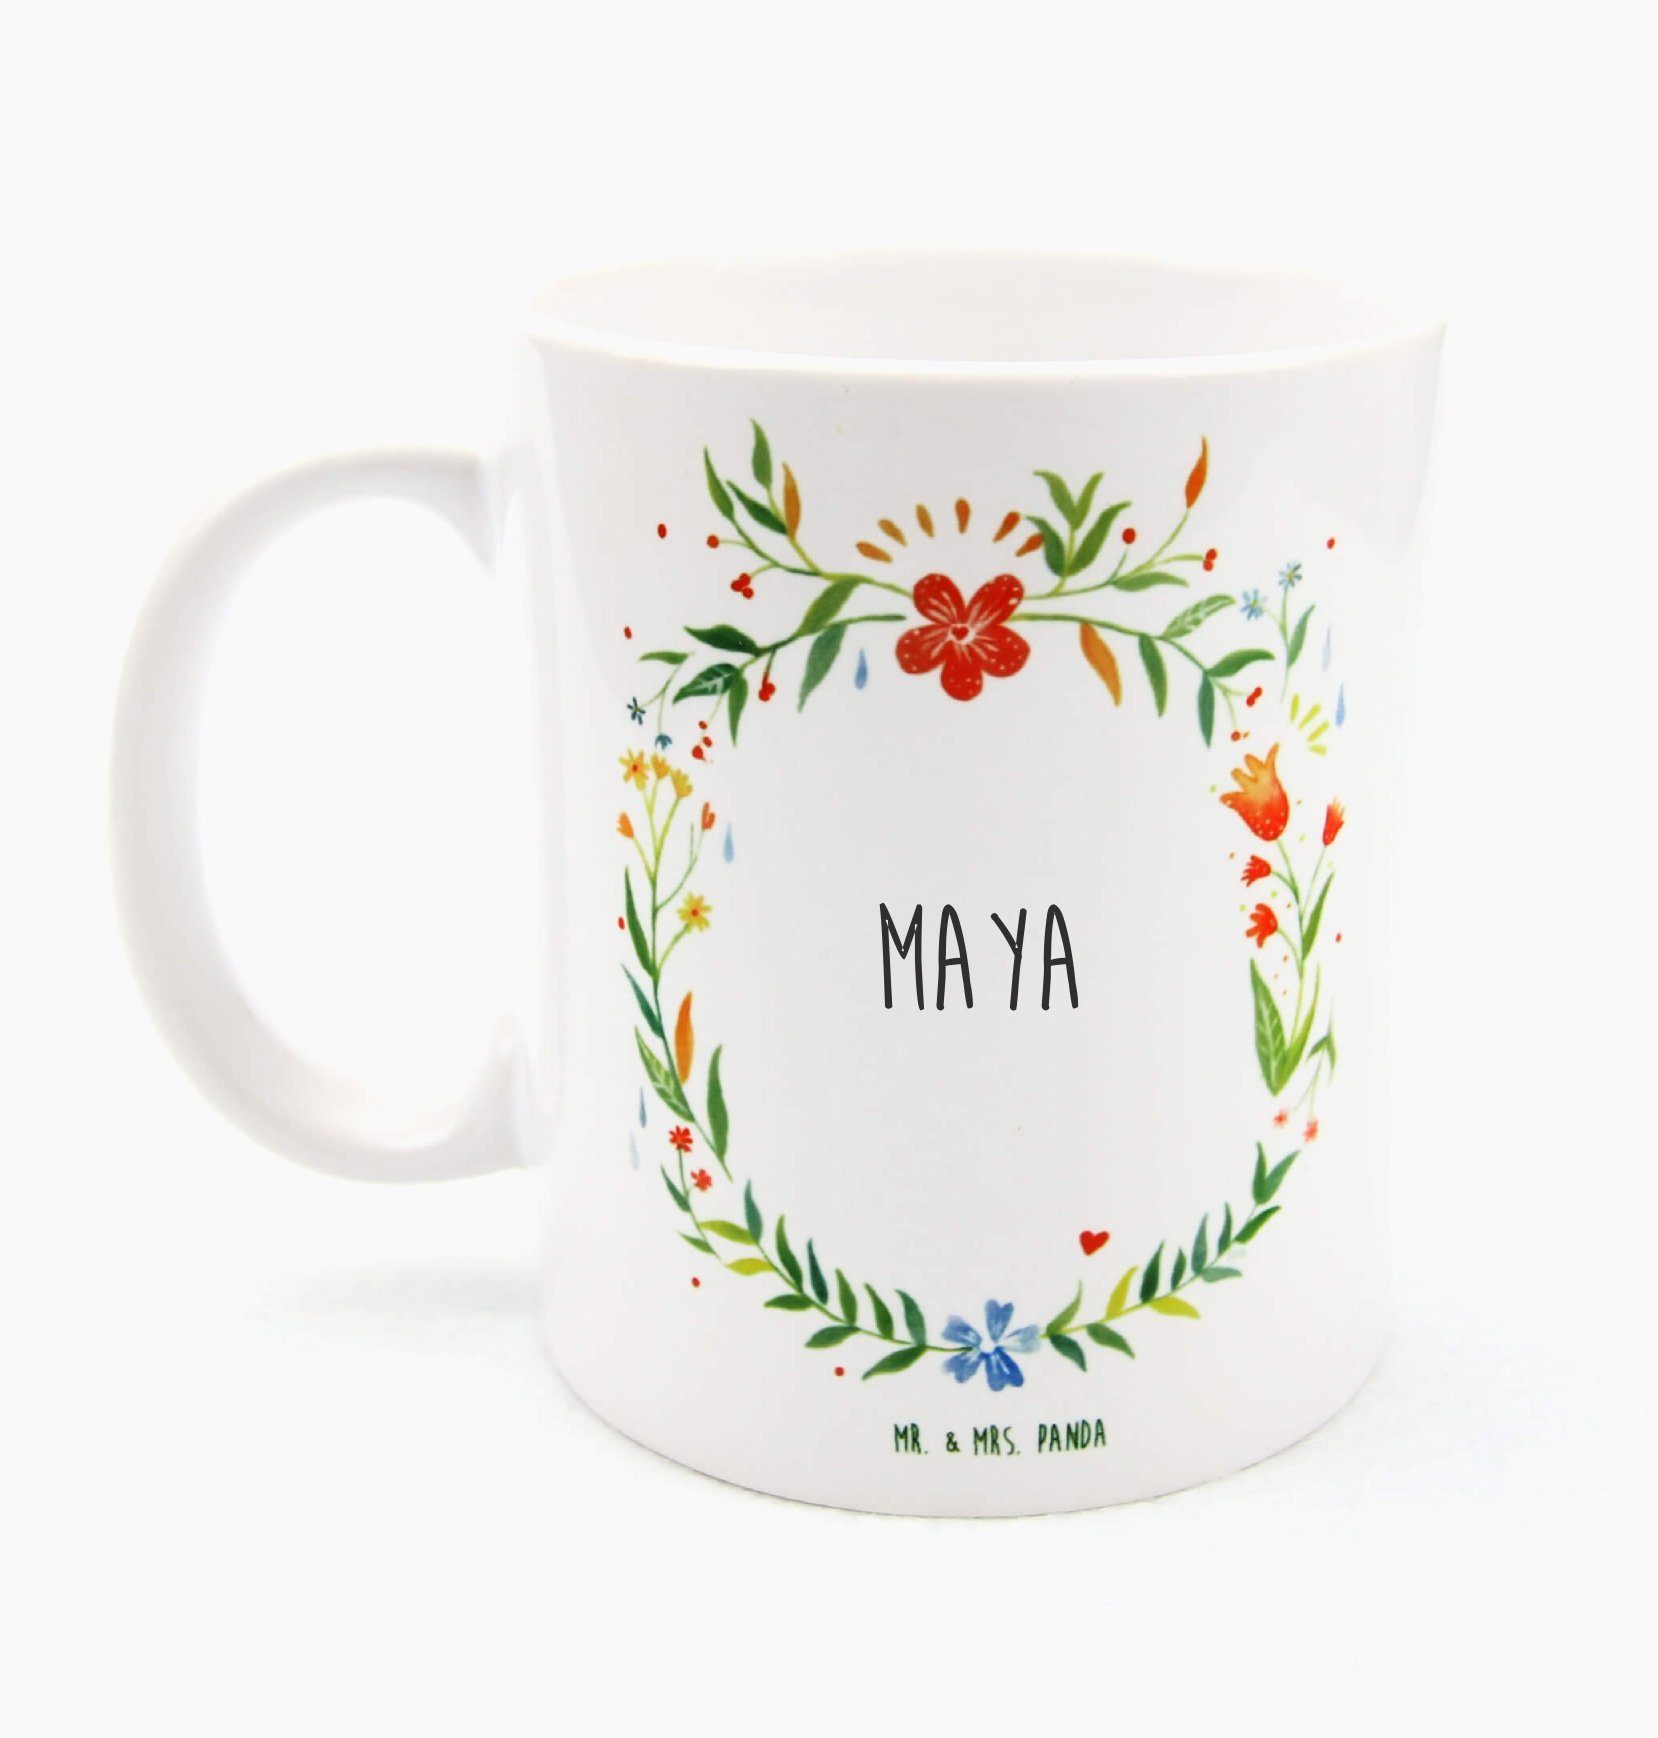 Mr. & Mrs. Panda Tasse Maya - Geschenk, Kaffeebecher, Büro Tasse, Tasse Sprüche, Teebecher, Keramik